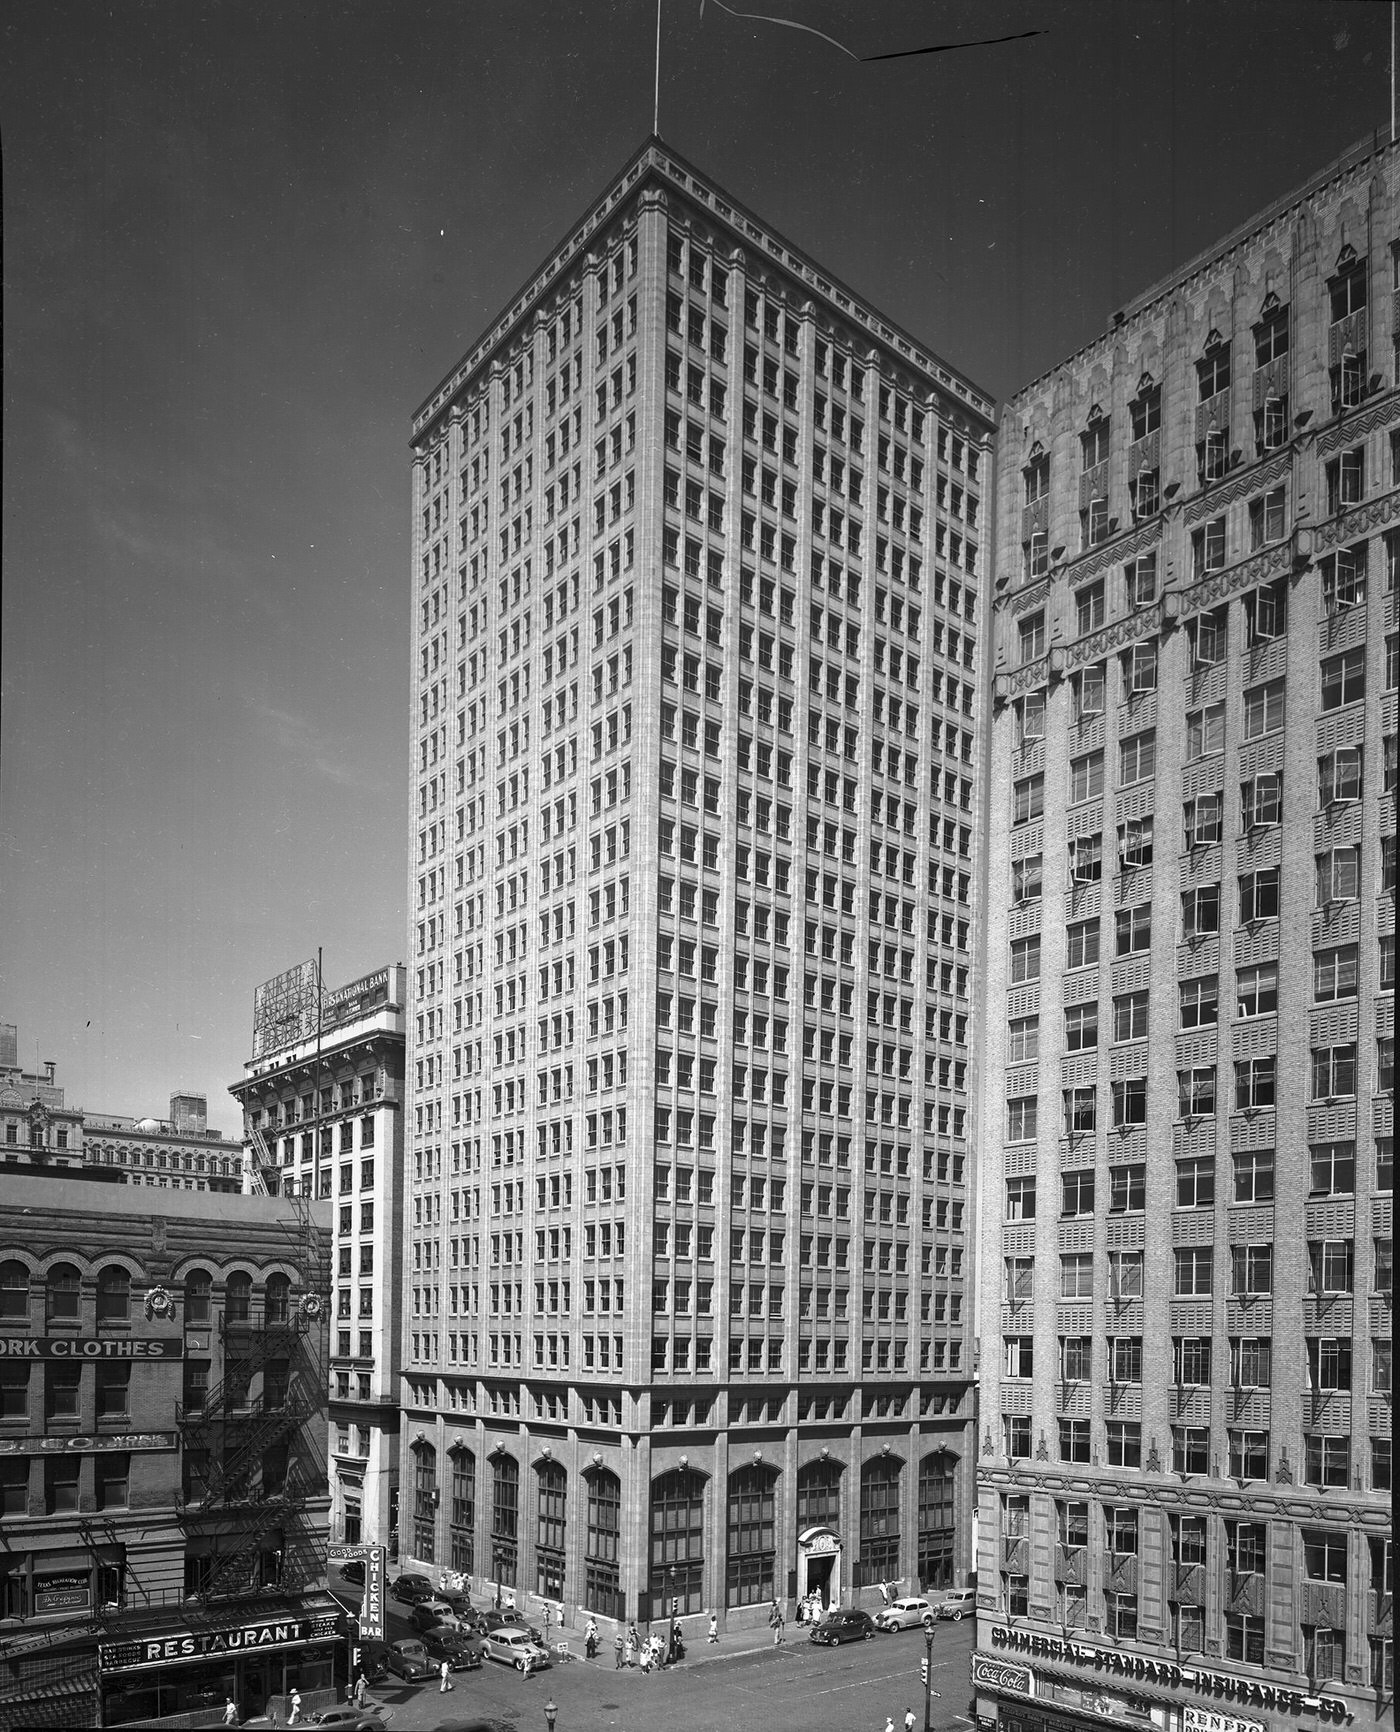 Fort Worth National Bank building, 1945